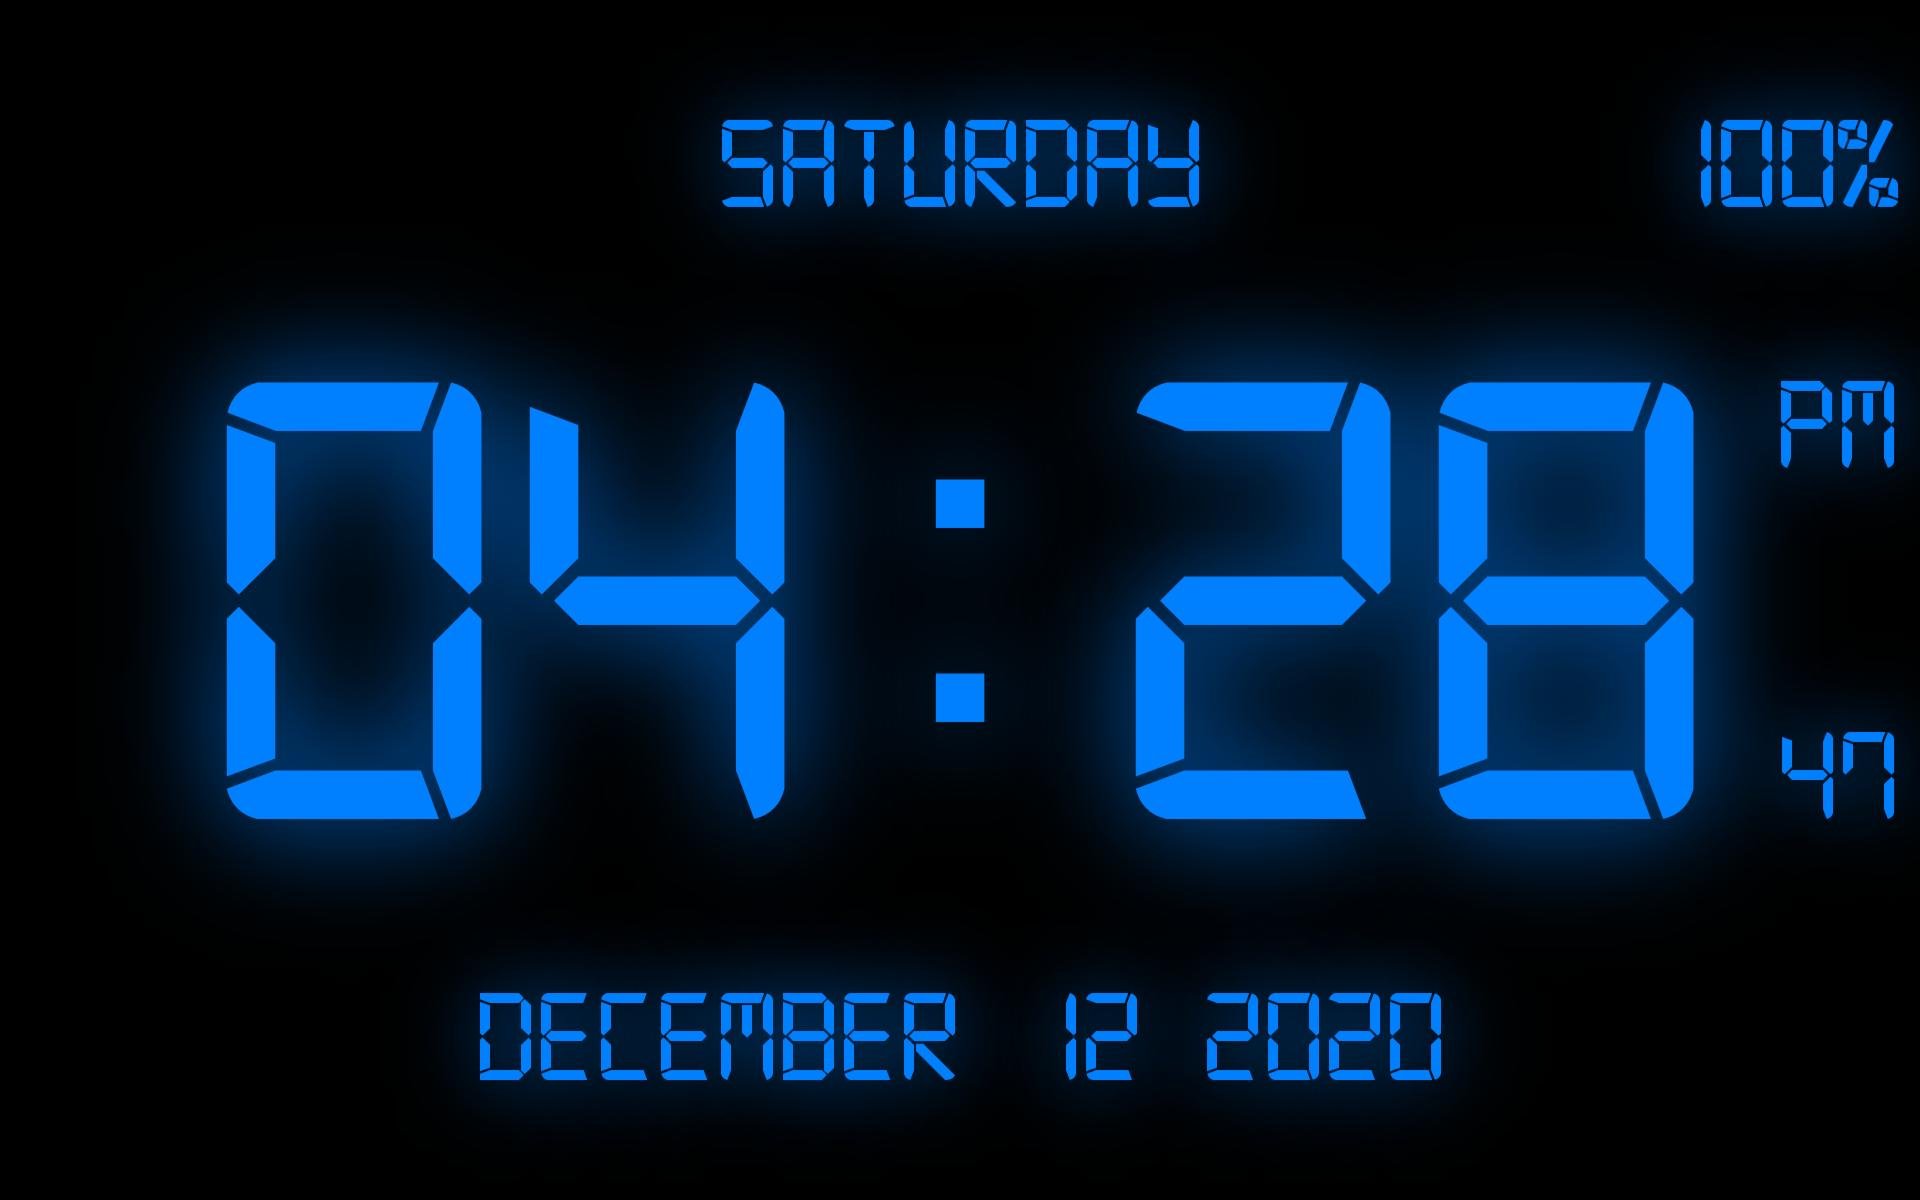 Часы на главную страницу. Часы Digital Clock 200730138828.4. Цифровые часы. Красивые цифровые часы. Электронные цифровые часы для андроид.